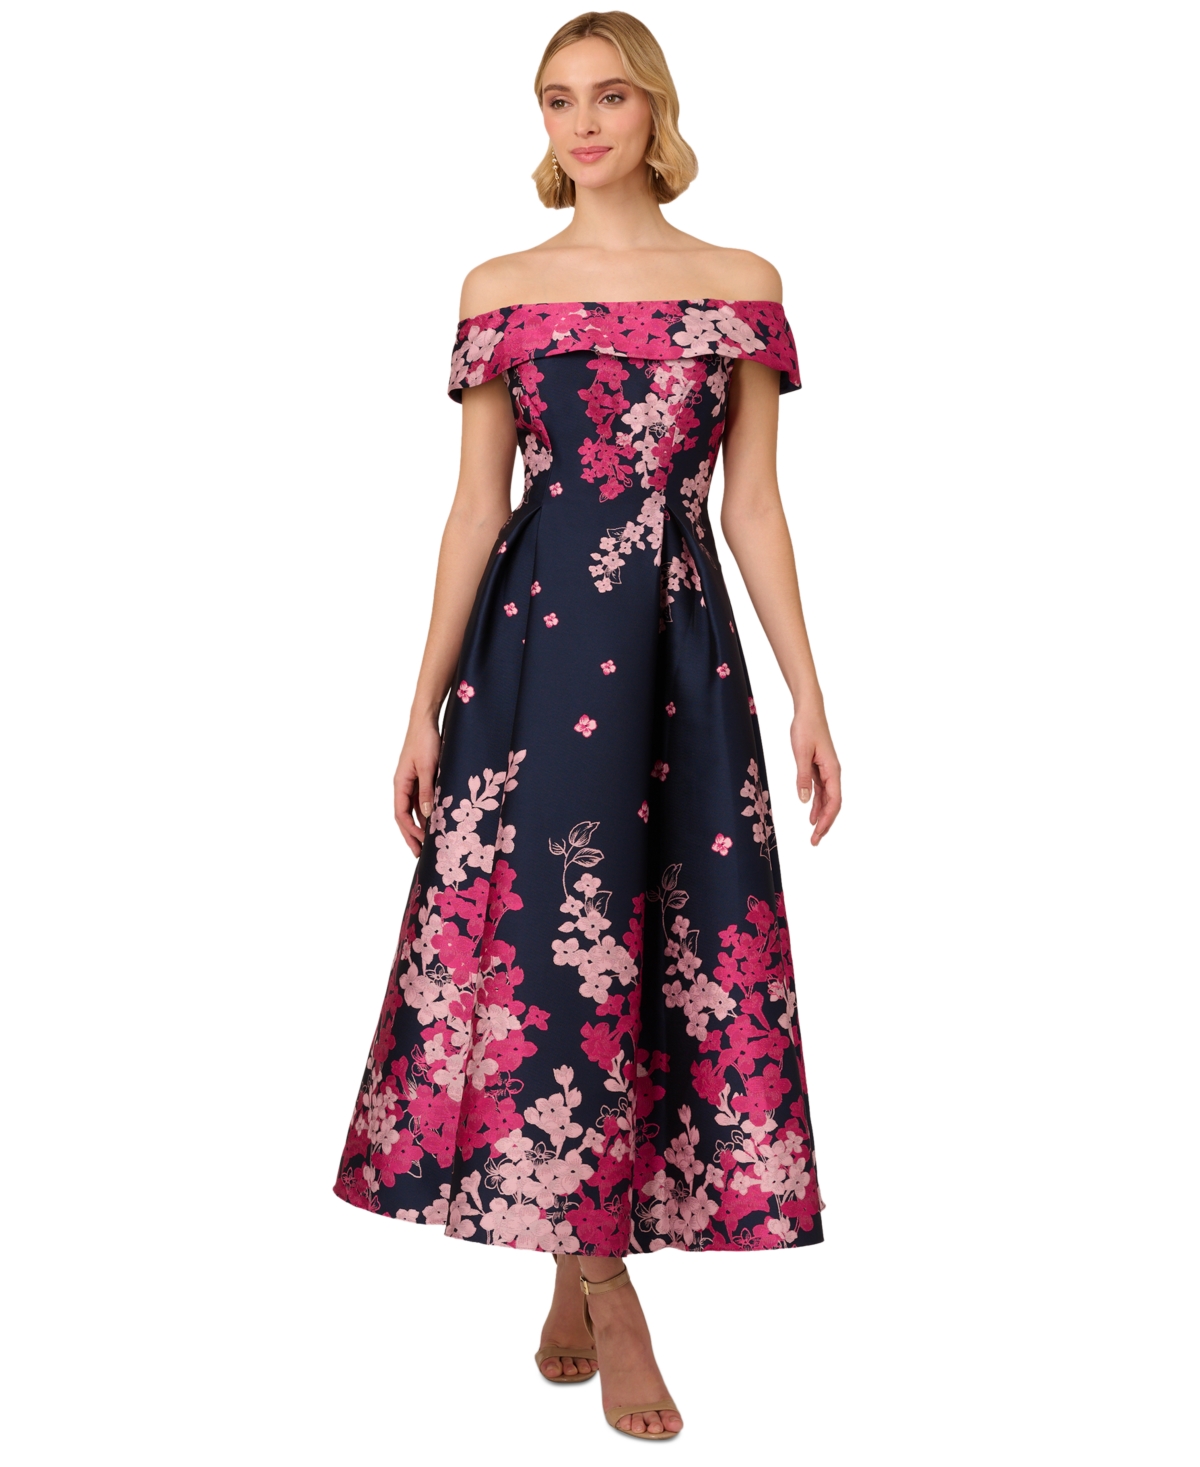 Women's Floral-Print Off-The-Shoulder Dress - Navy Pink Multi